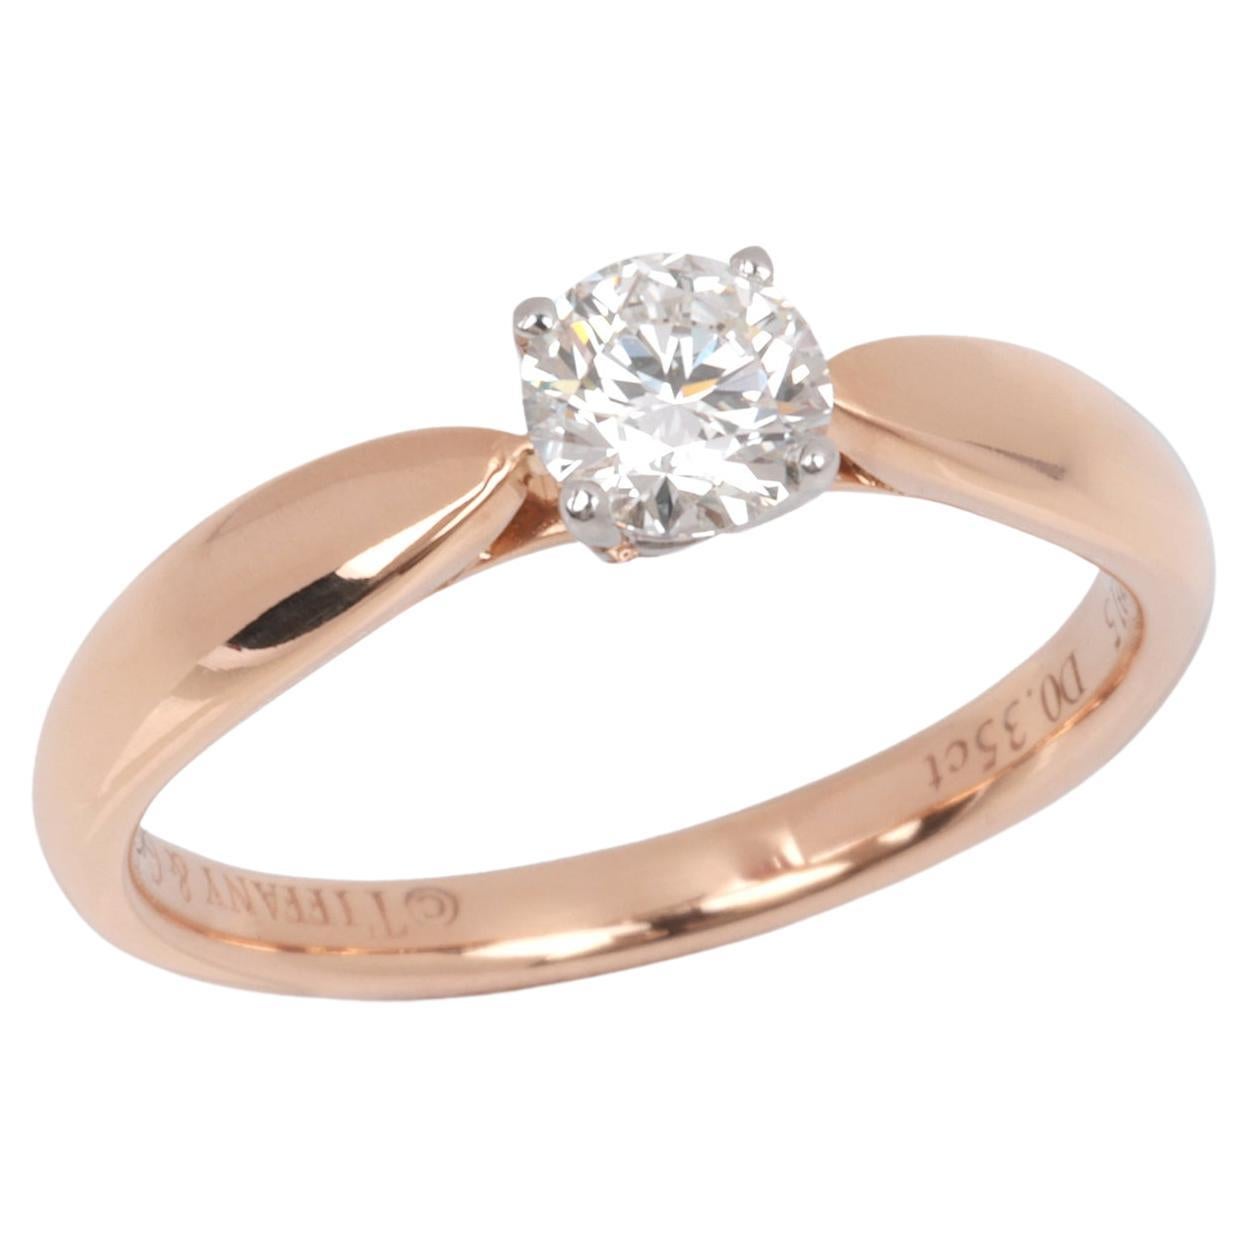 Tiffany & Co. Bague Harmony en or rose 18 carats avec diamant 0,35 carat